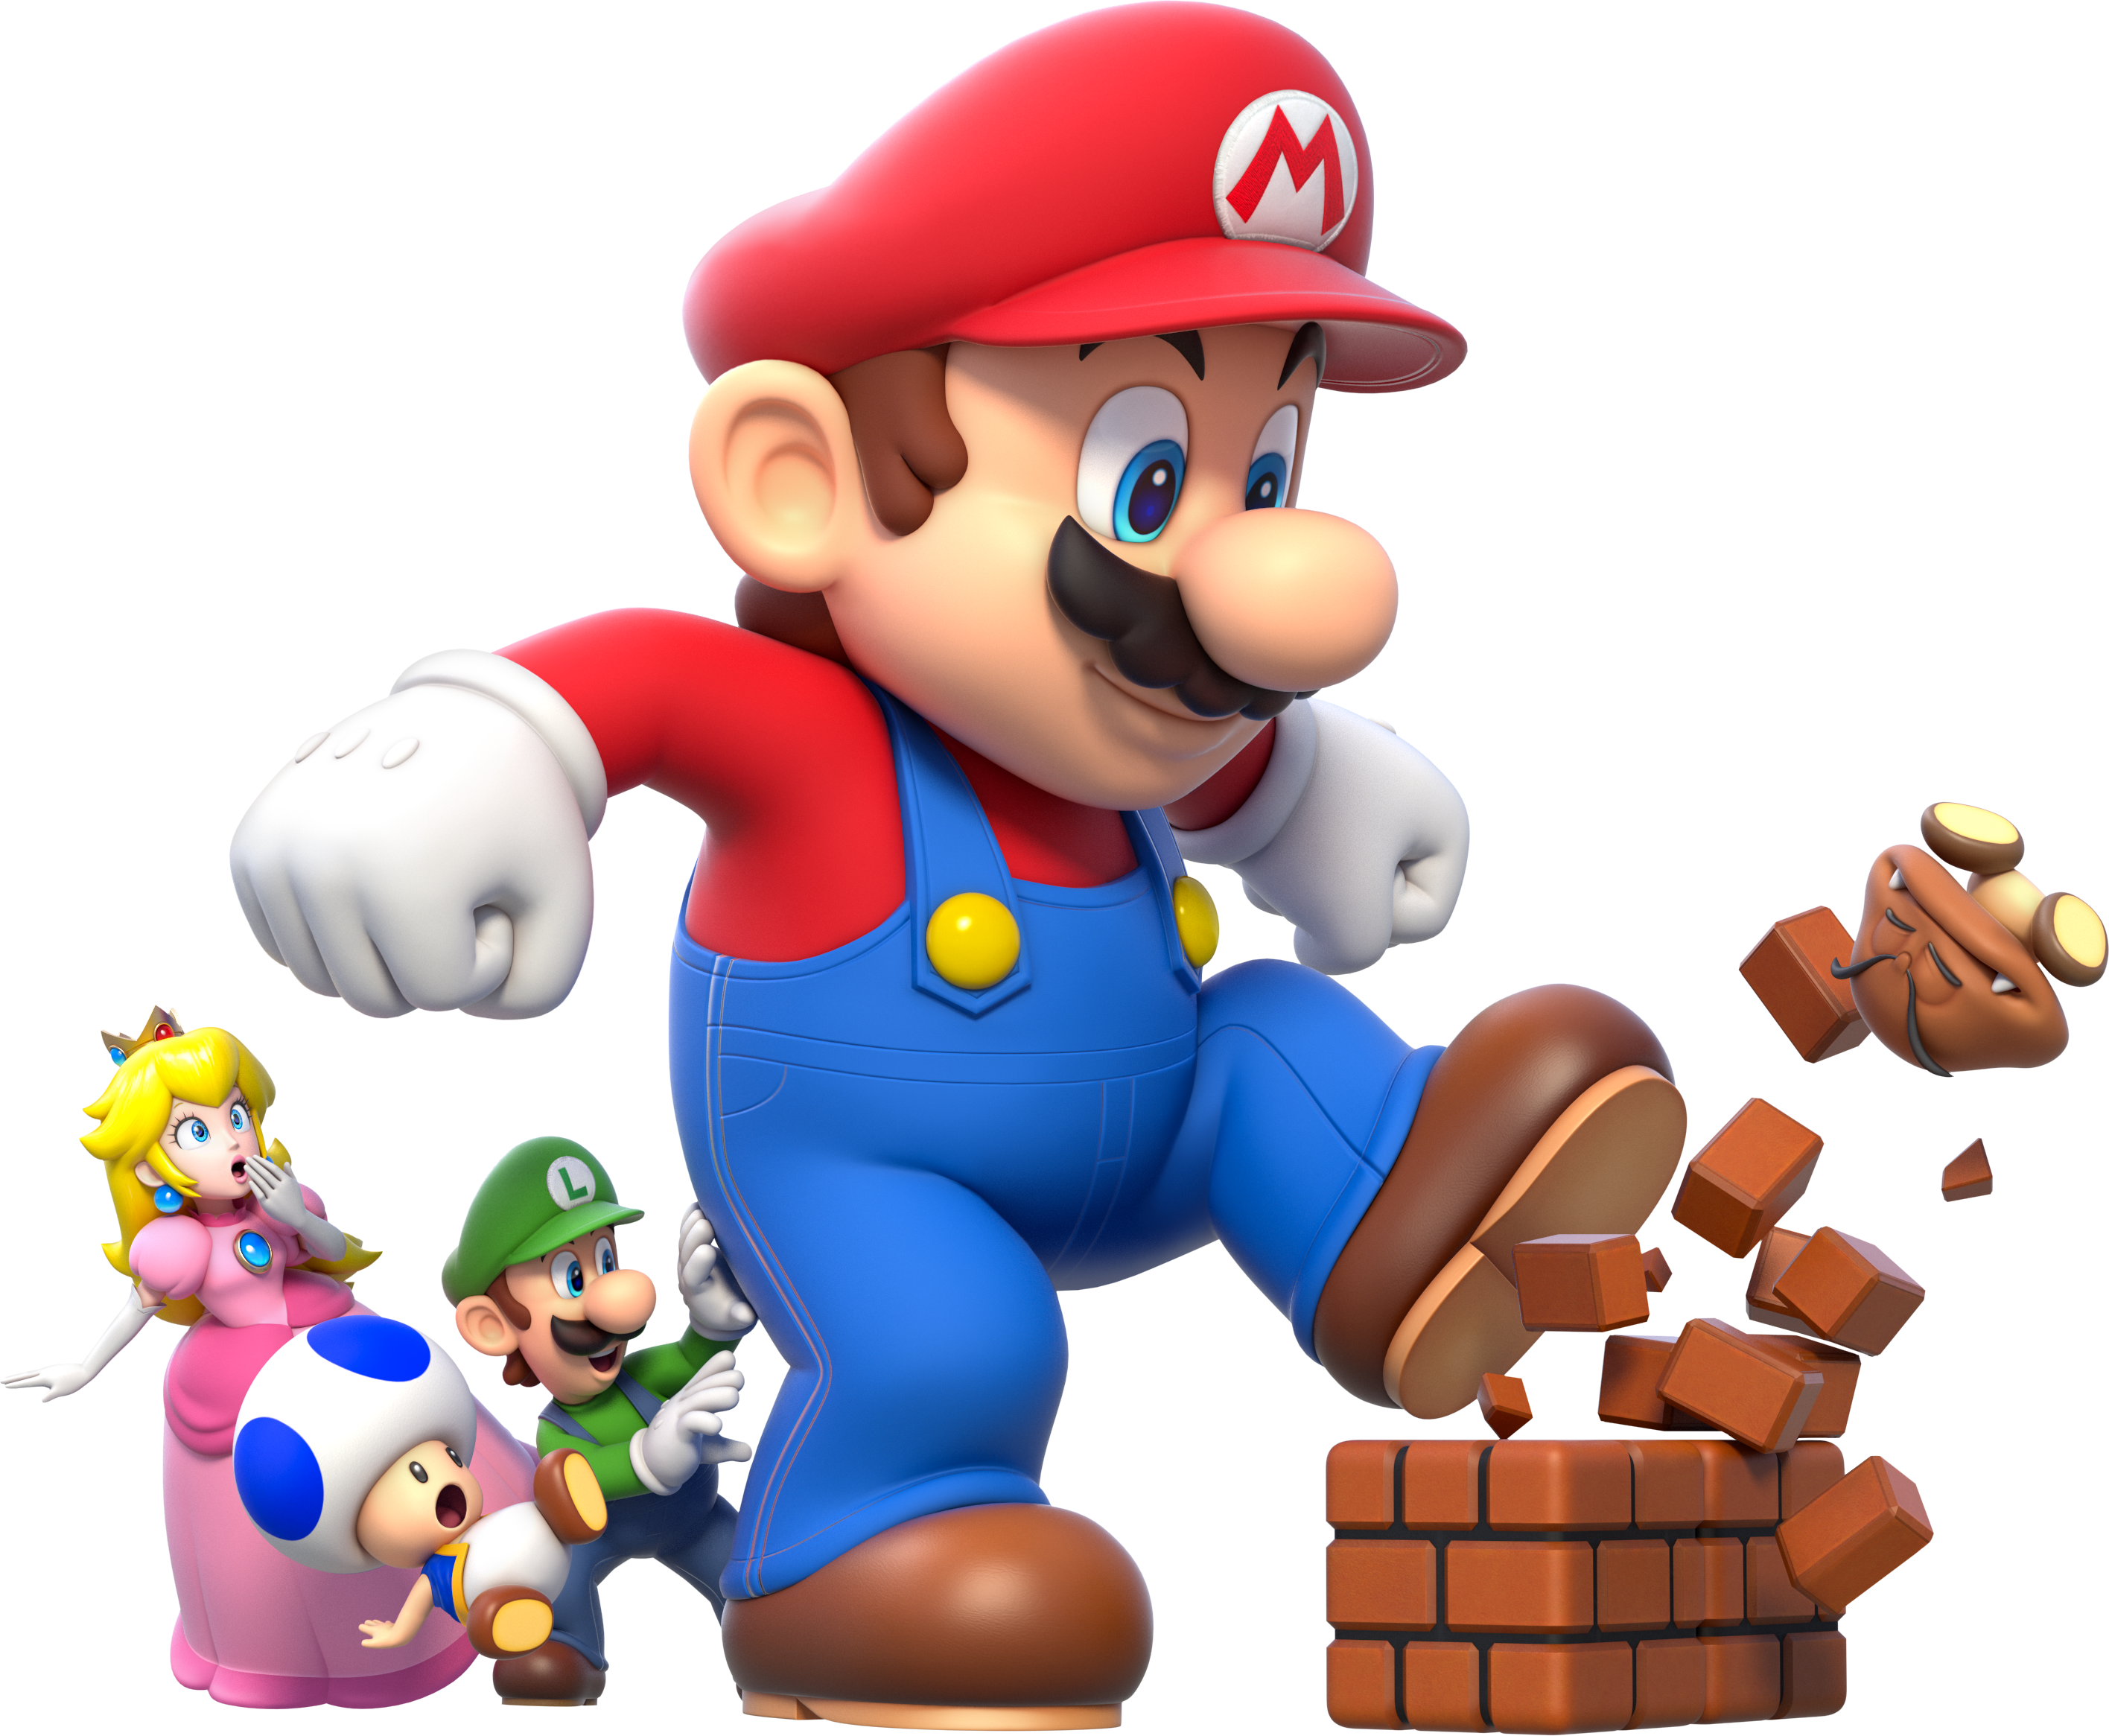 Super Mario 3D World (Wii U) Artwork including characters, enemies